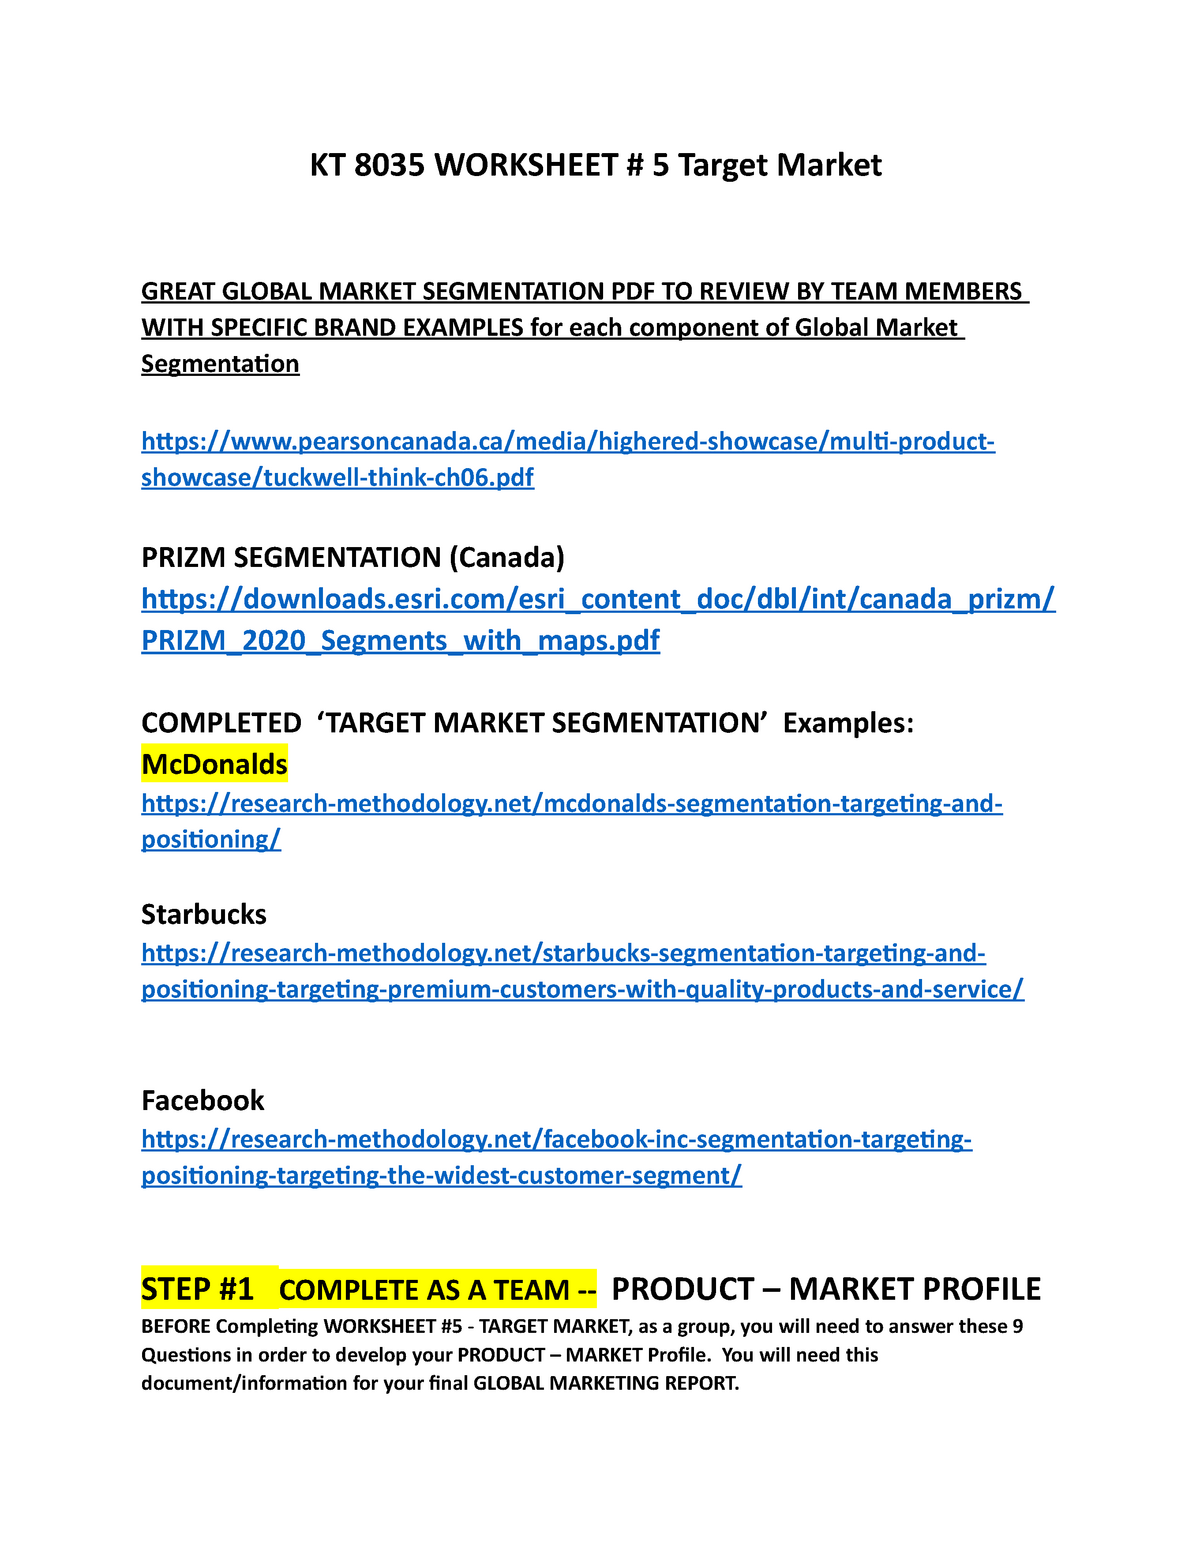 target market profile example